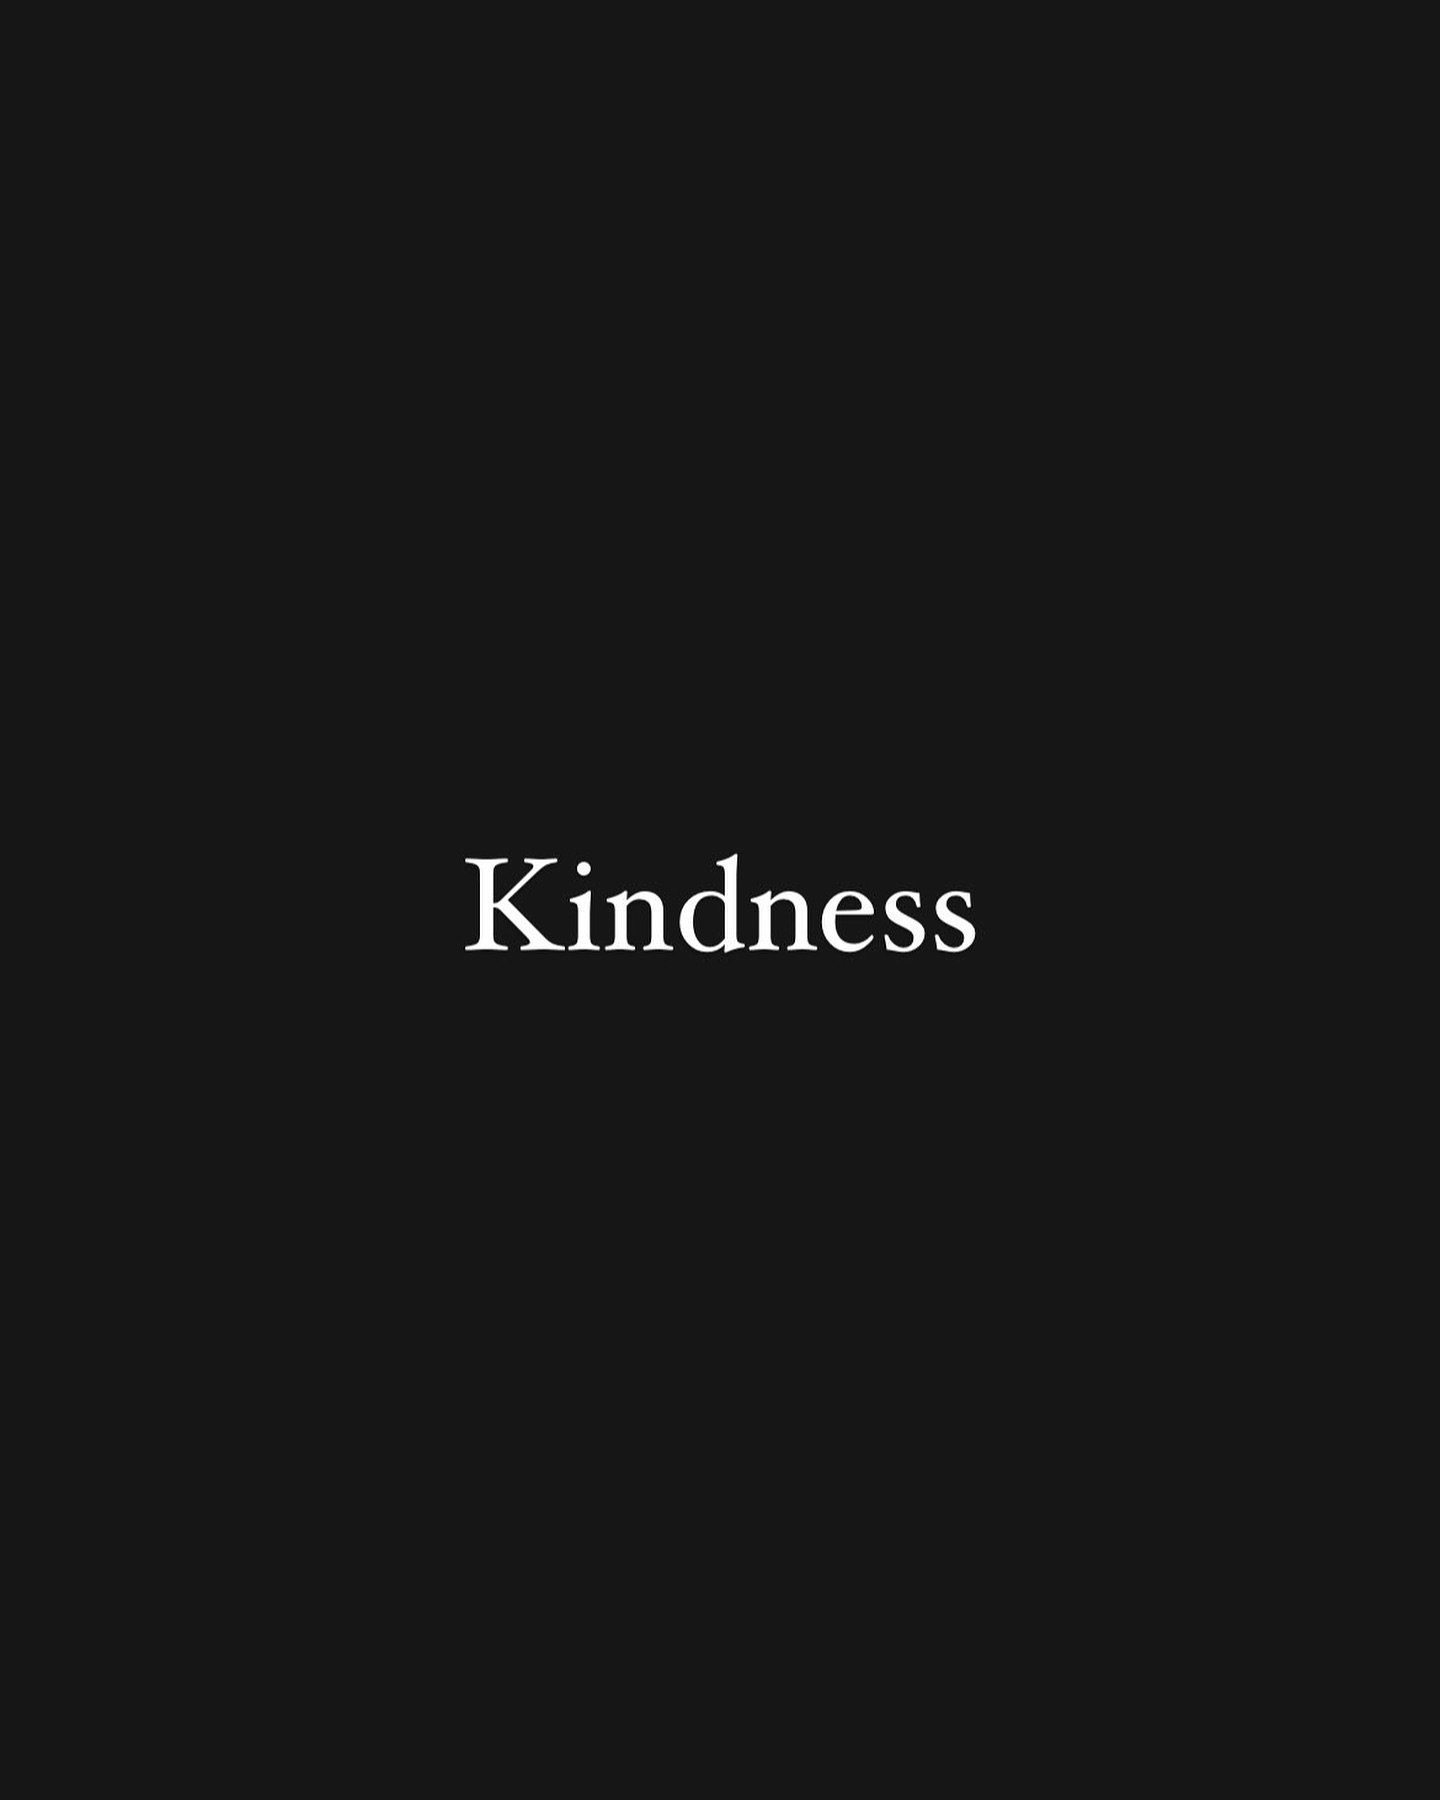 #love #kindness #material #moral #morals #highsociety #society #auroraborealis